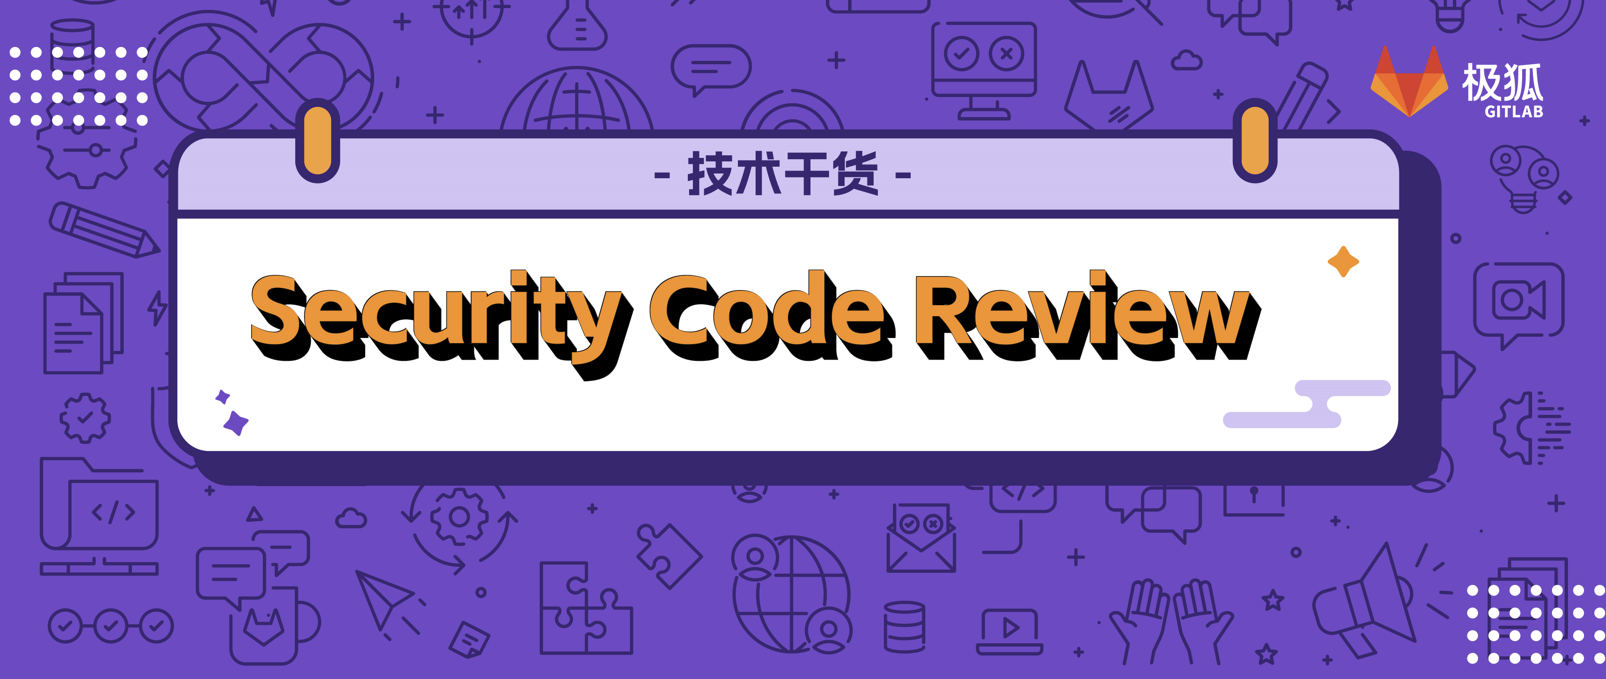 Securtiy Code Reviewer 需要做些什么？6个安全实例一探究竟